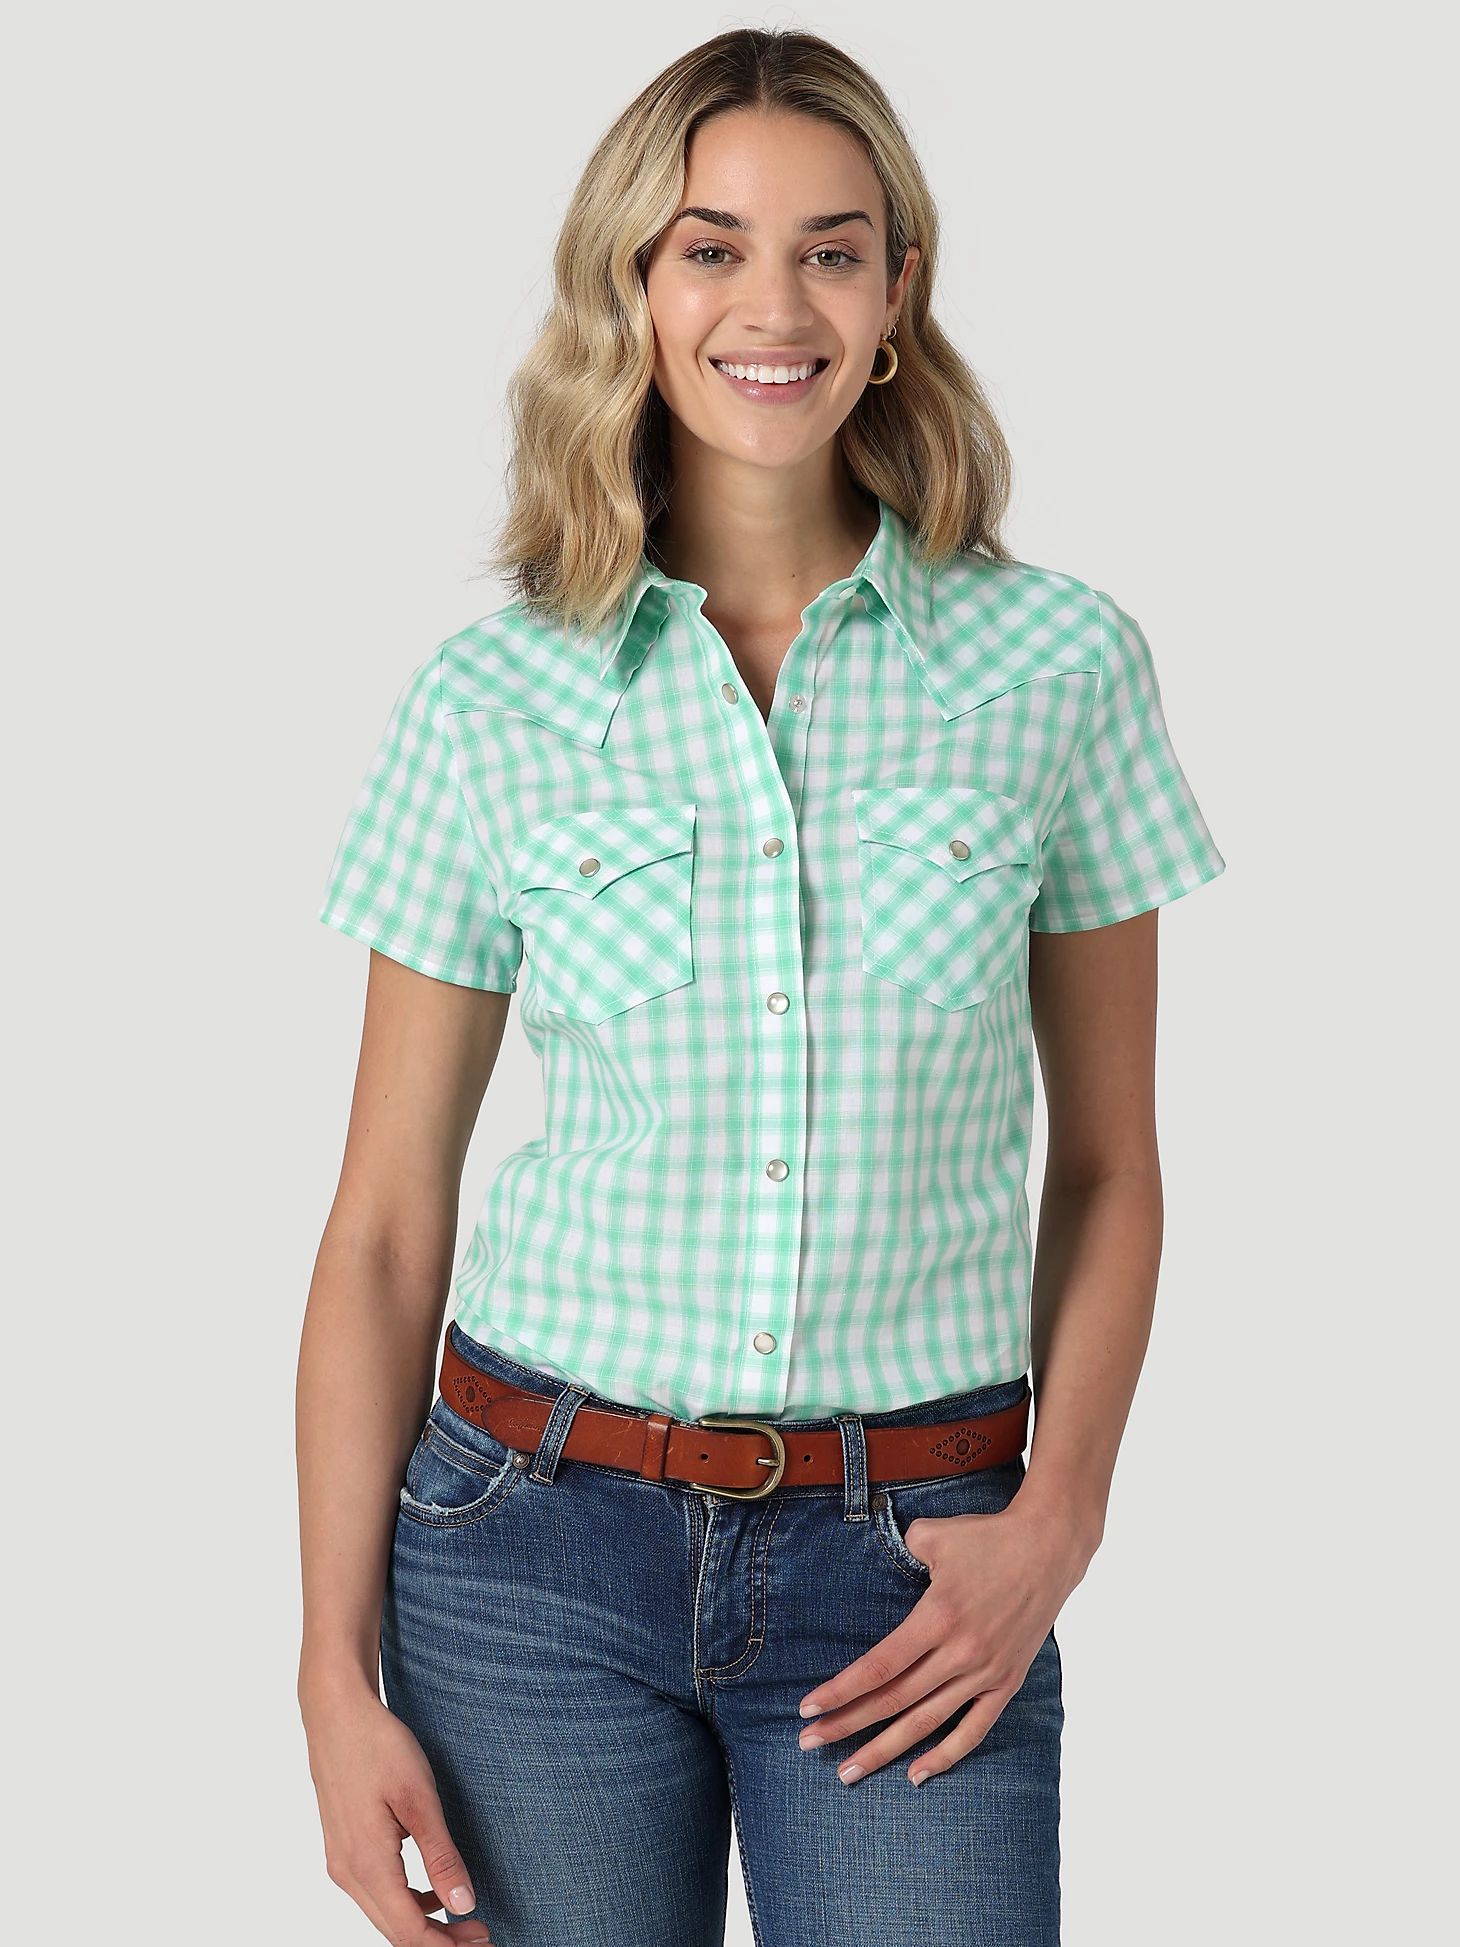 Women's Essential Short Sleeve Plaid Western Snap Top in Grassy Green | Wrangler